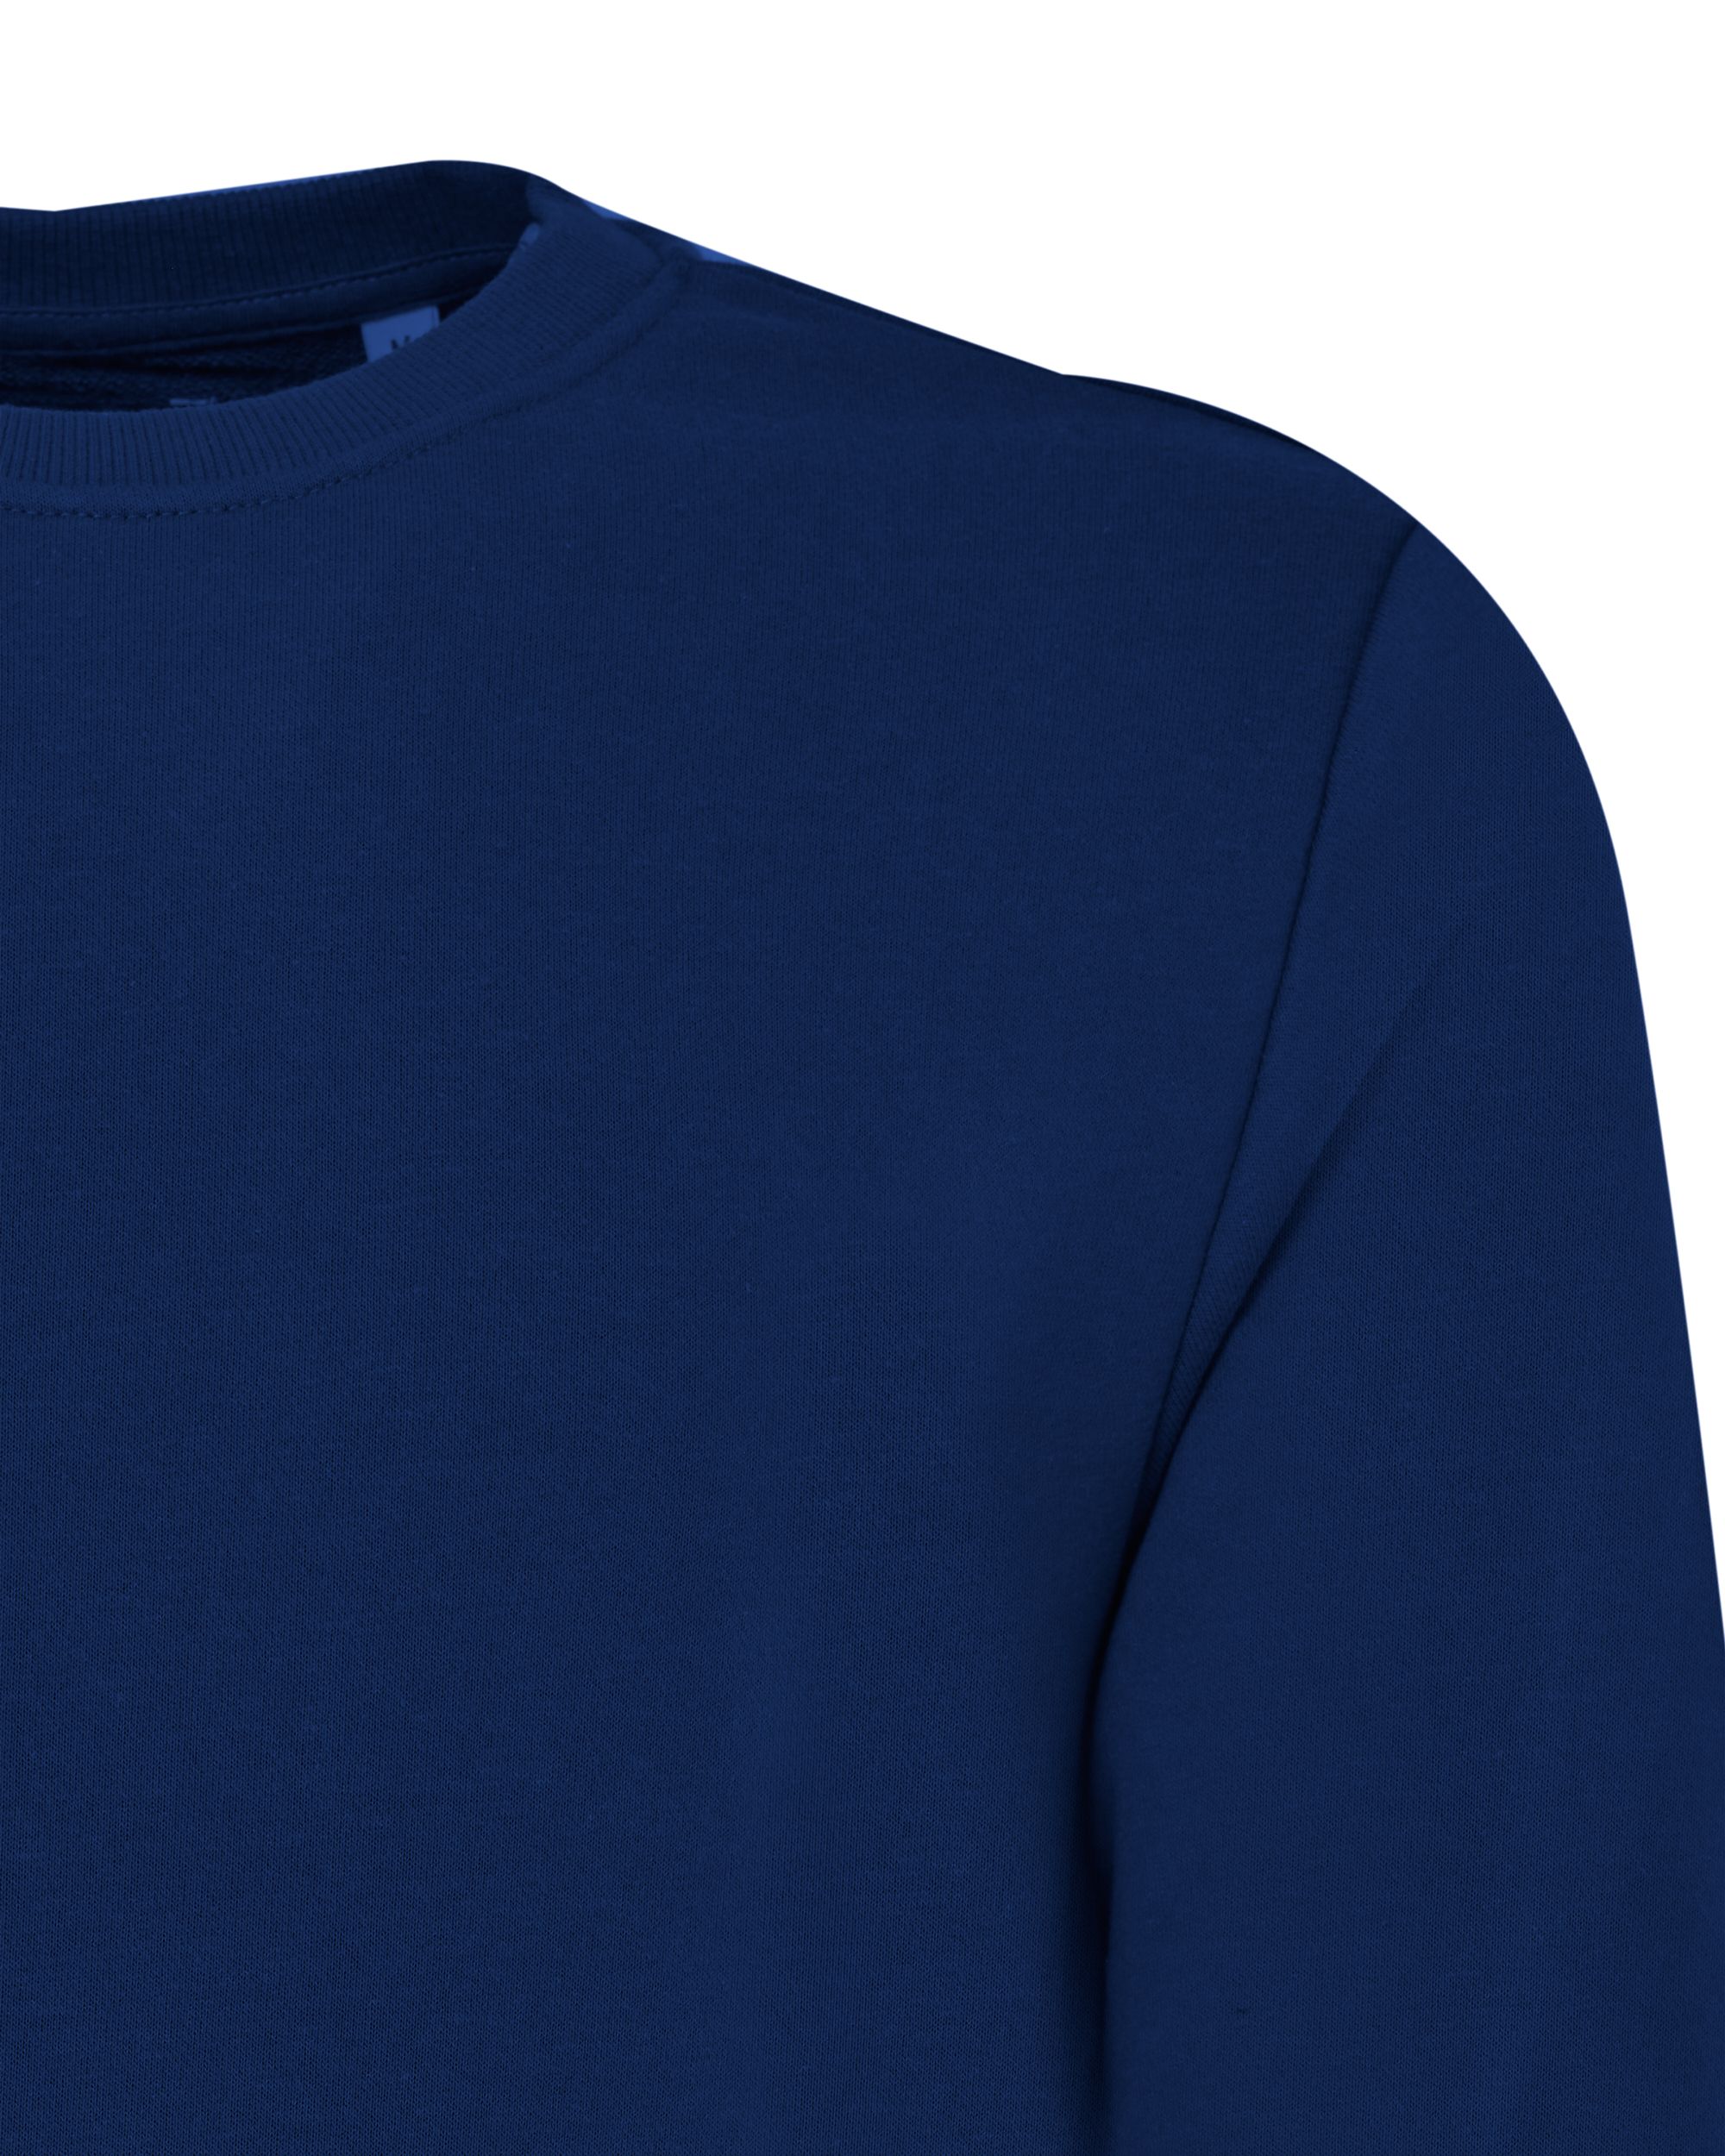 The BLUEPRINT Premium Sweater Donkerblauw uni 078208-001-L